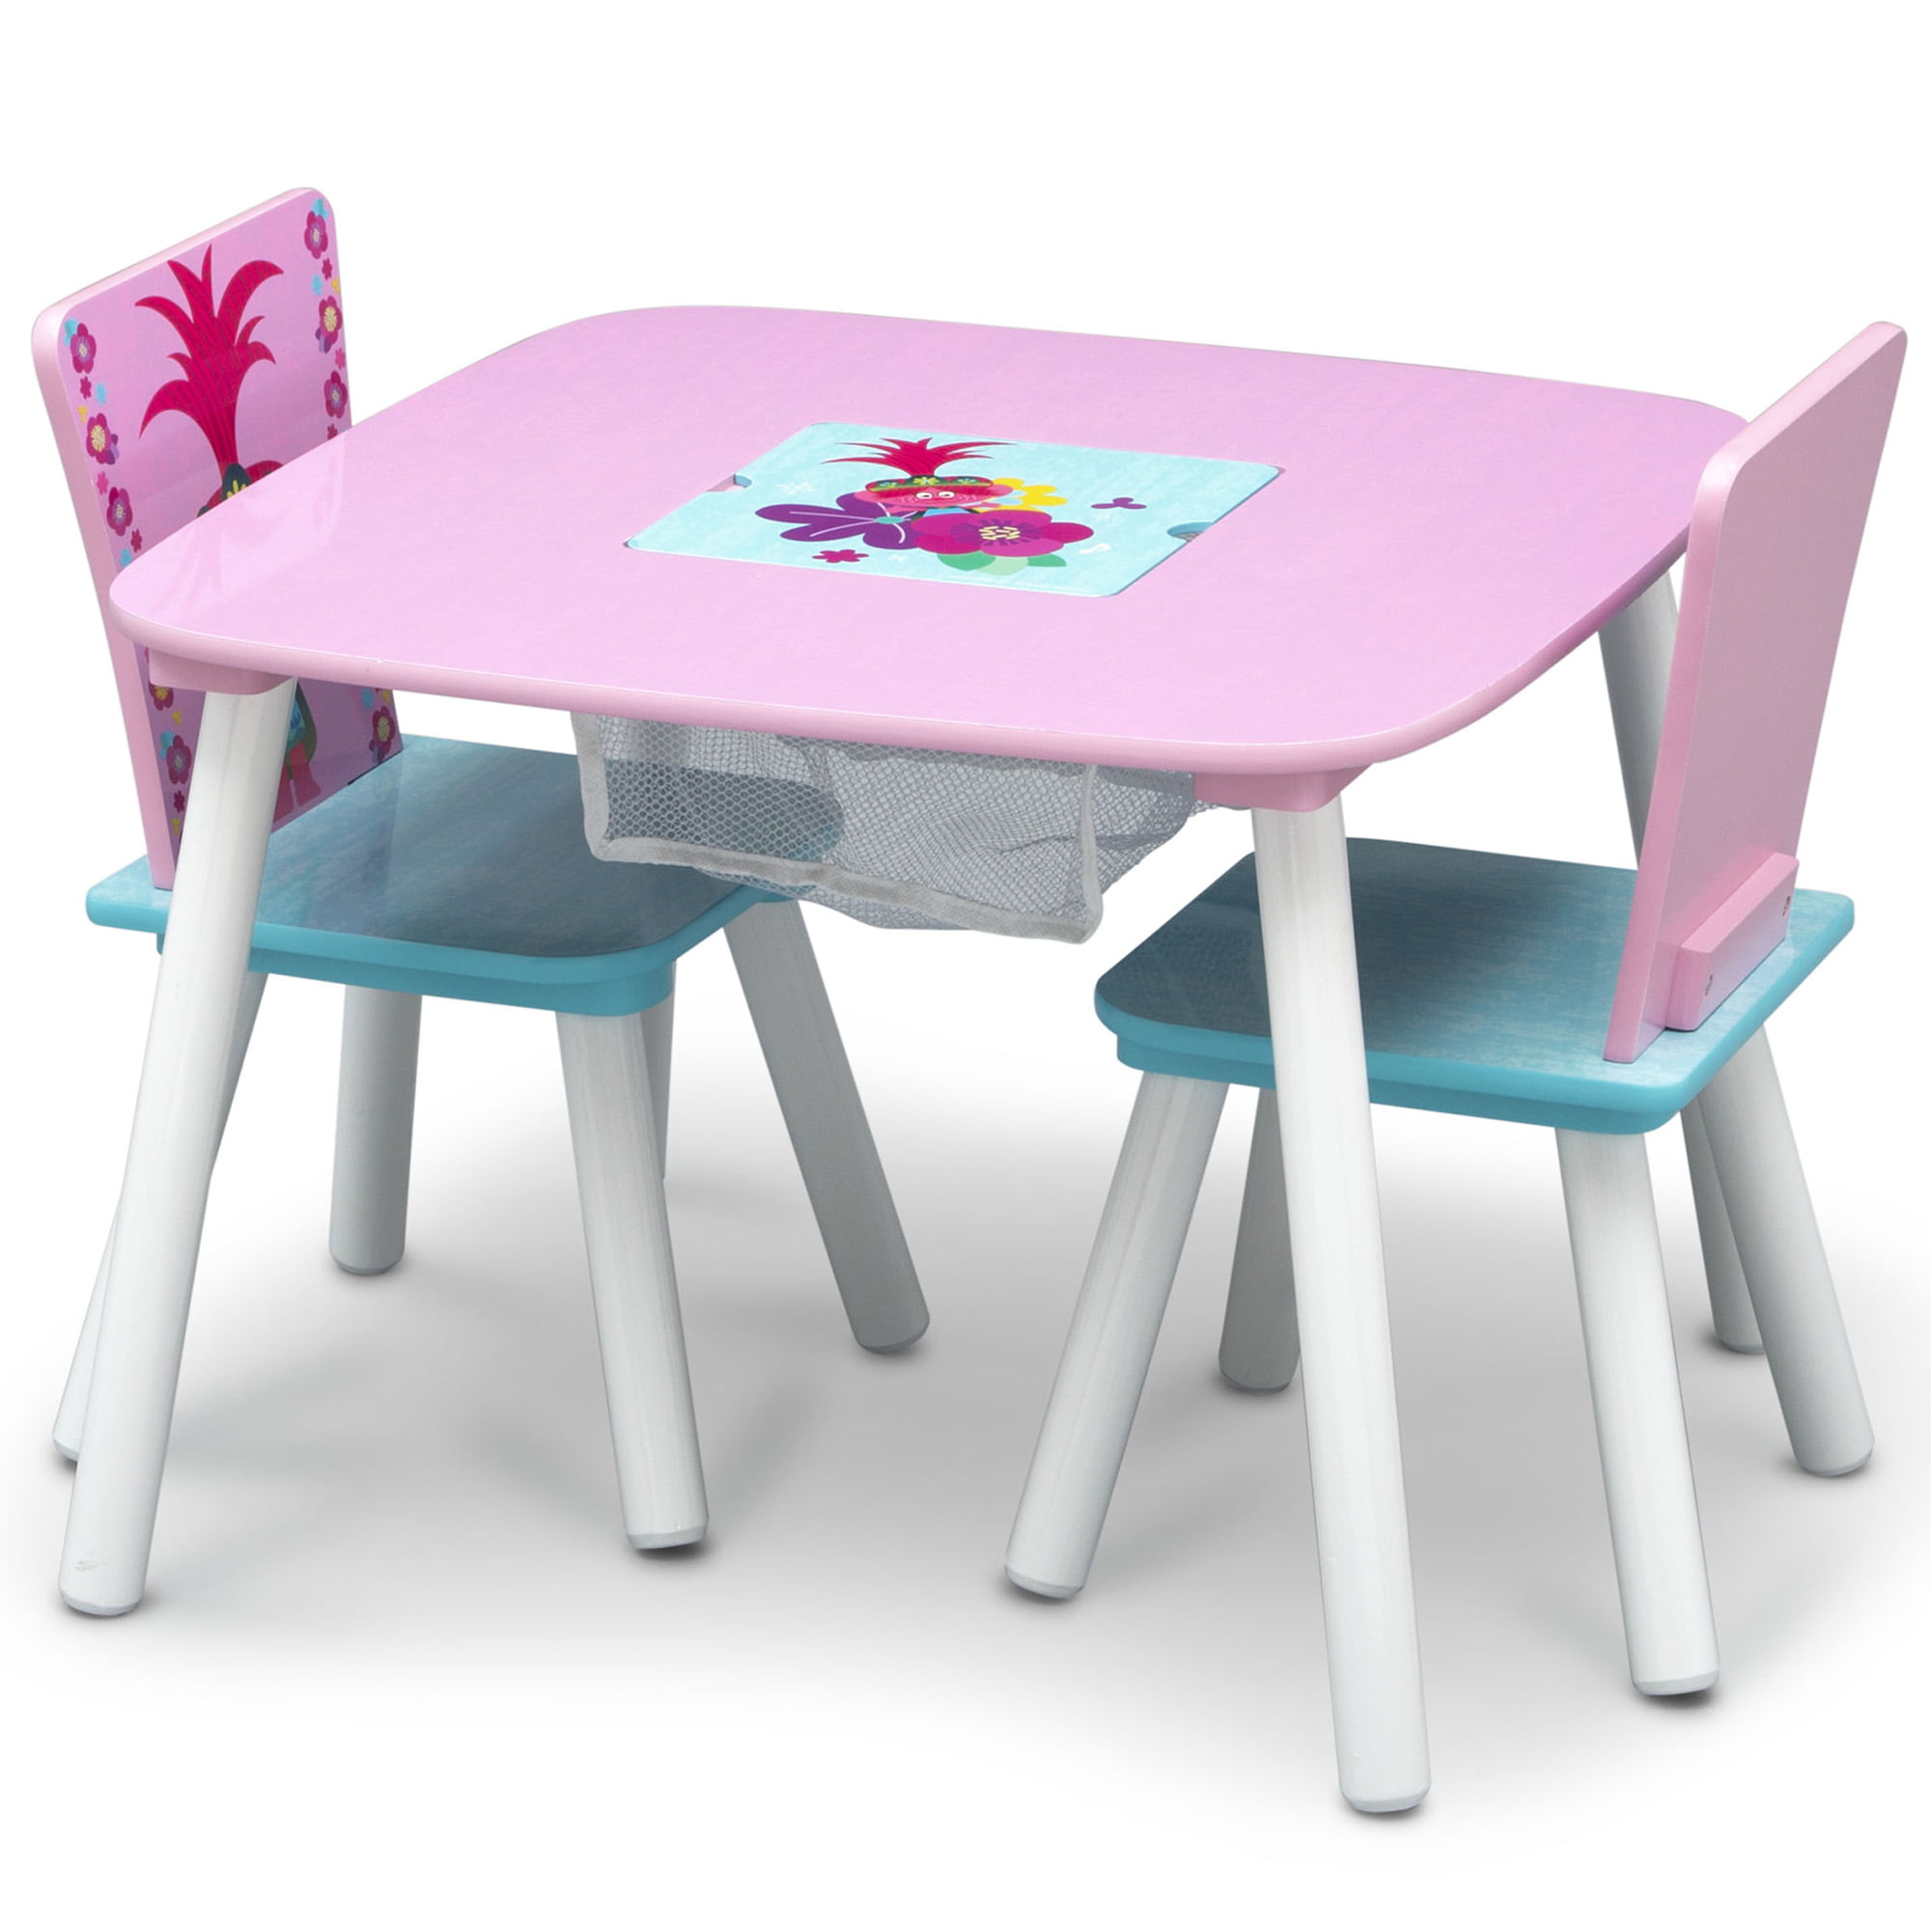 Trolls Set Chair Table Multicolour 35 x 35 x 40 cm 